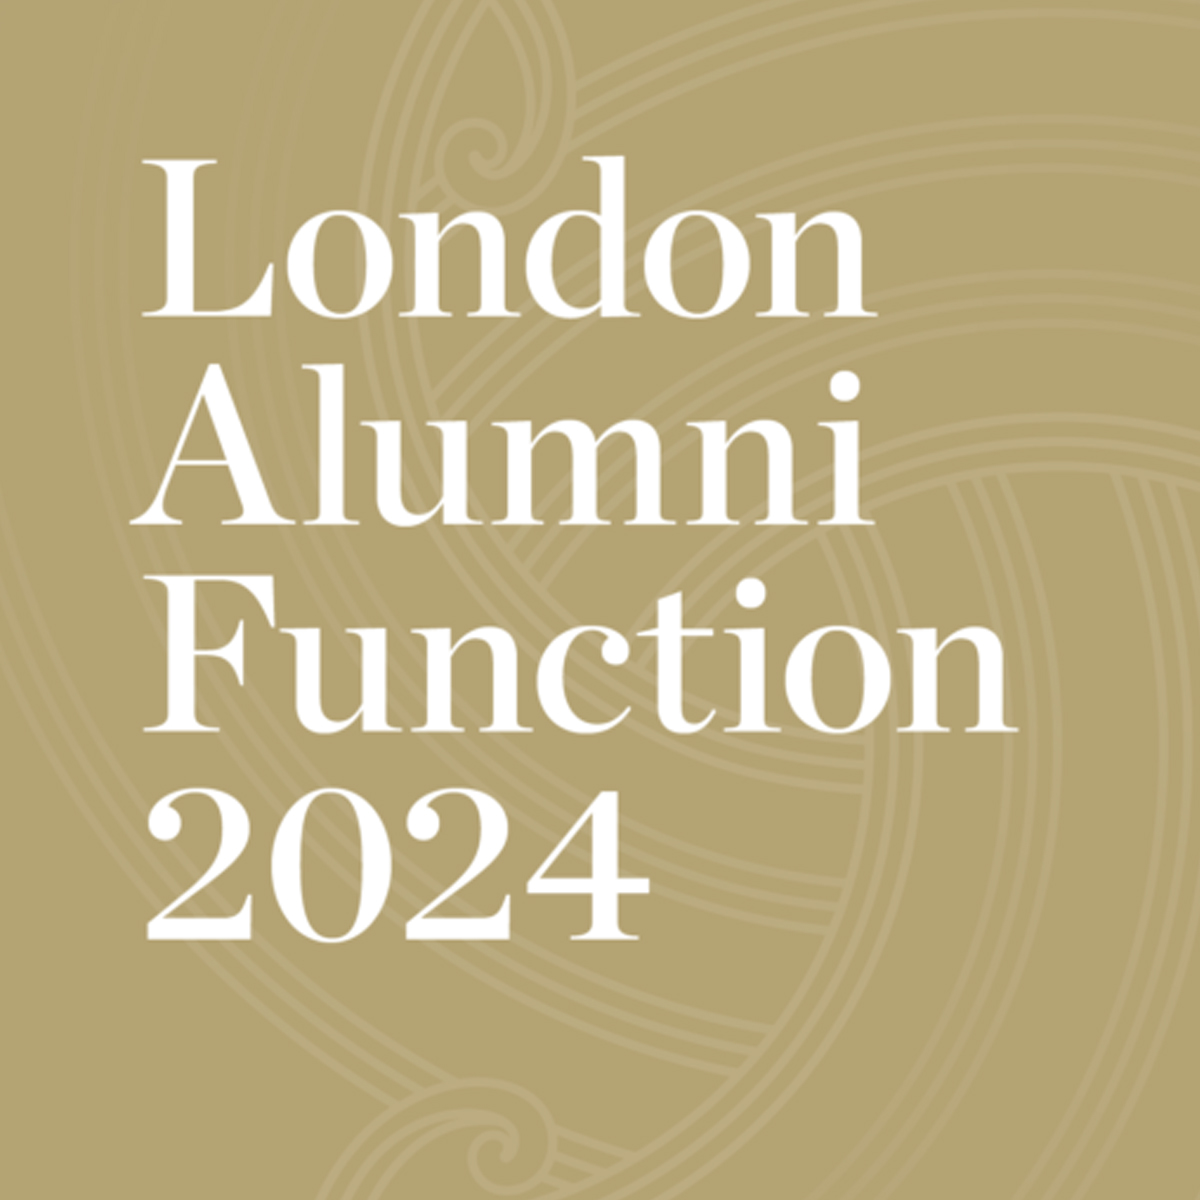 UC Alumni Function in London